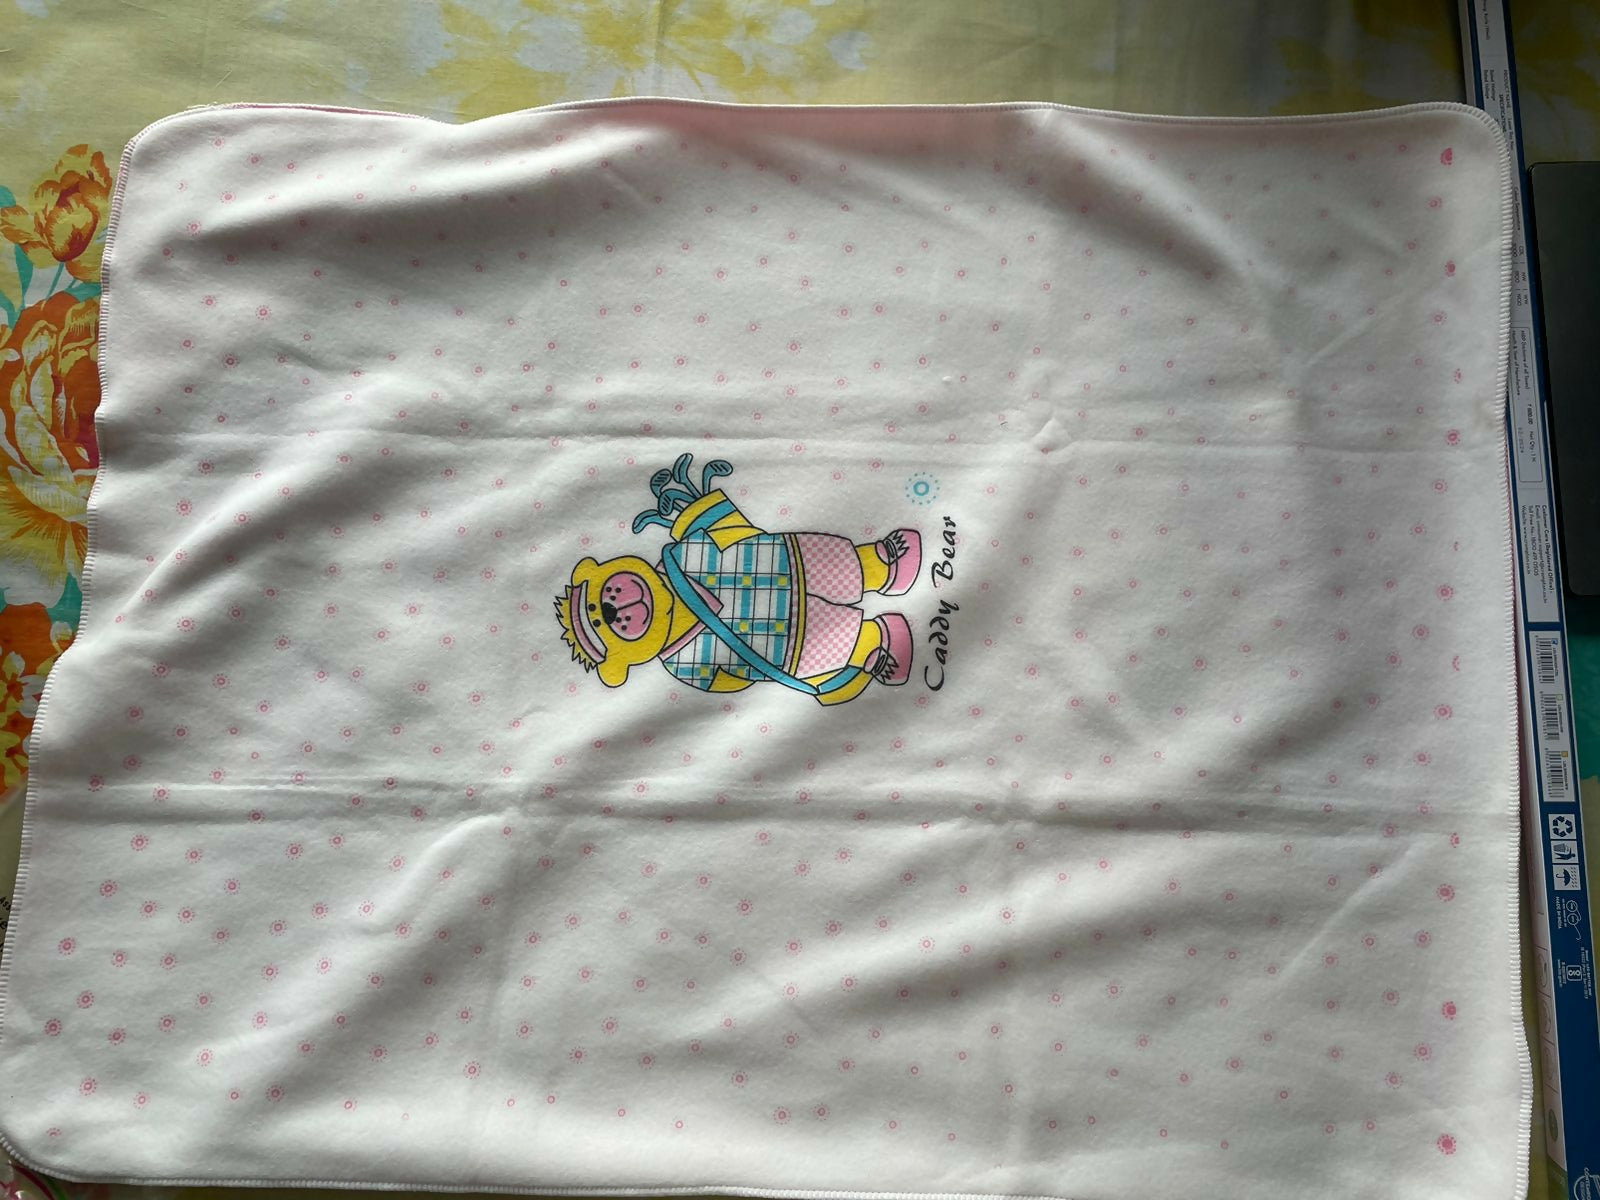 ORIENTAL's Fleece / Coral / Polar Baby Blankets Pink Colour - Caddy Bear Print - PyaraBaby